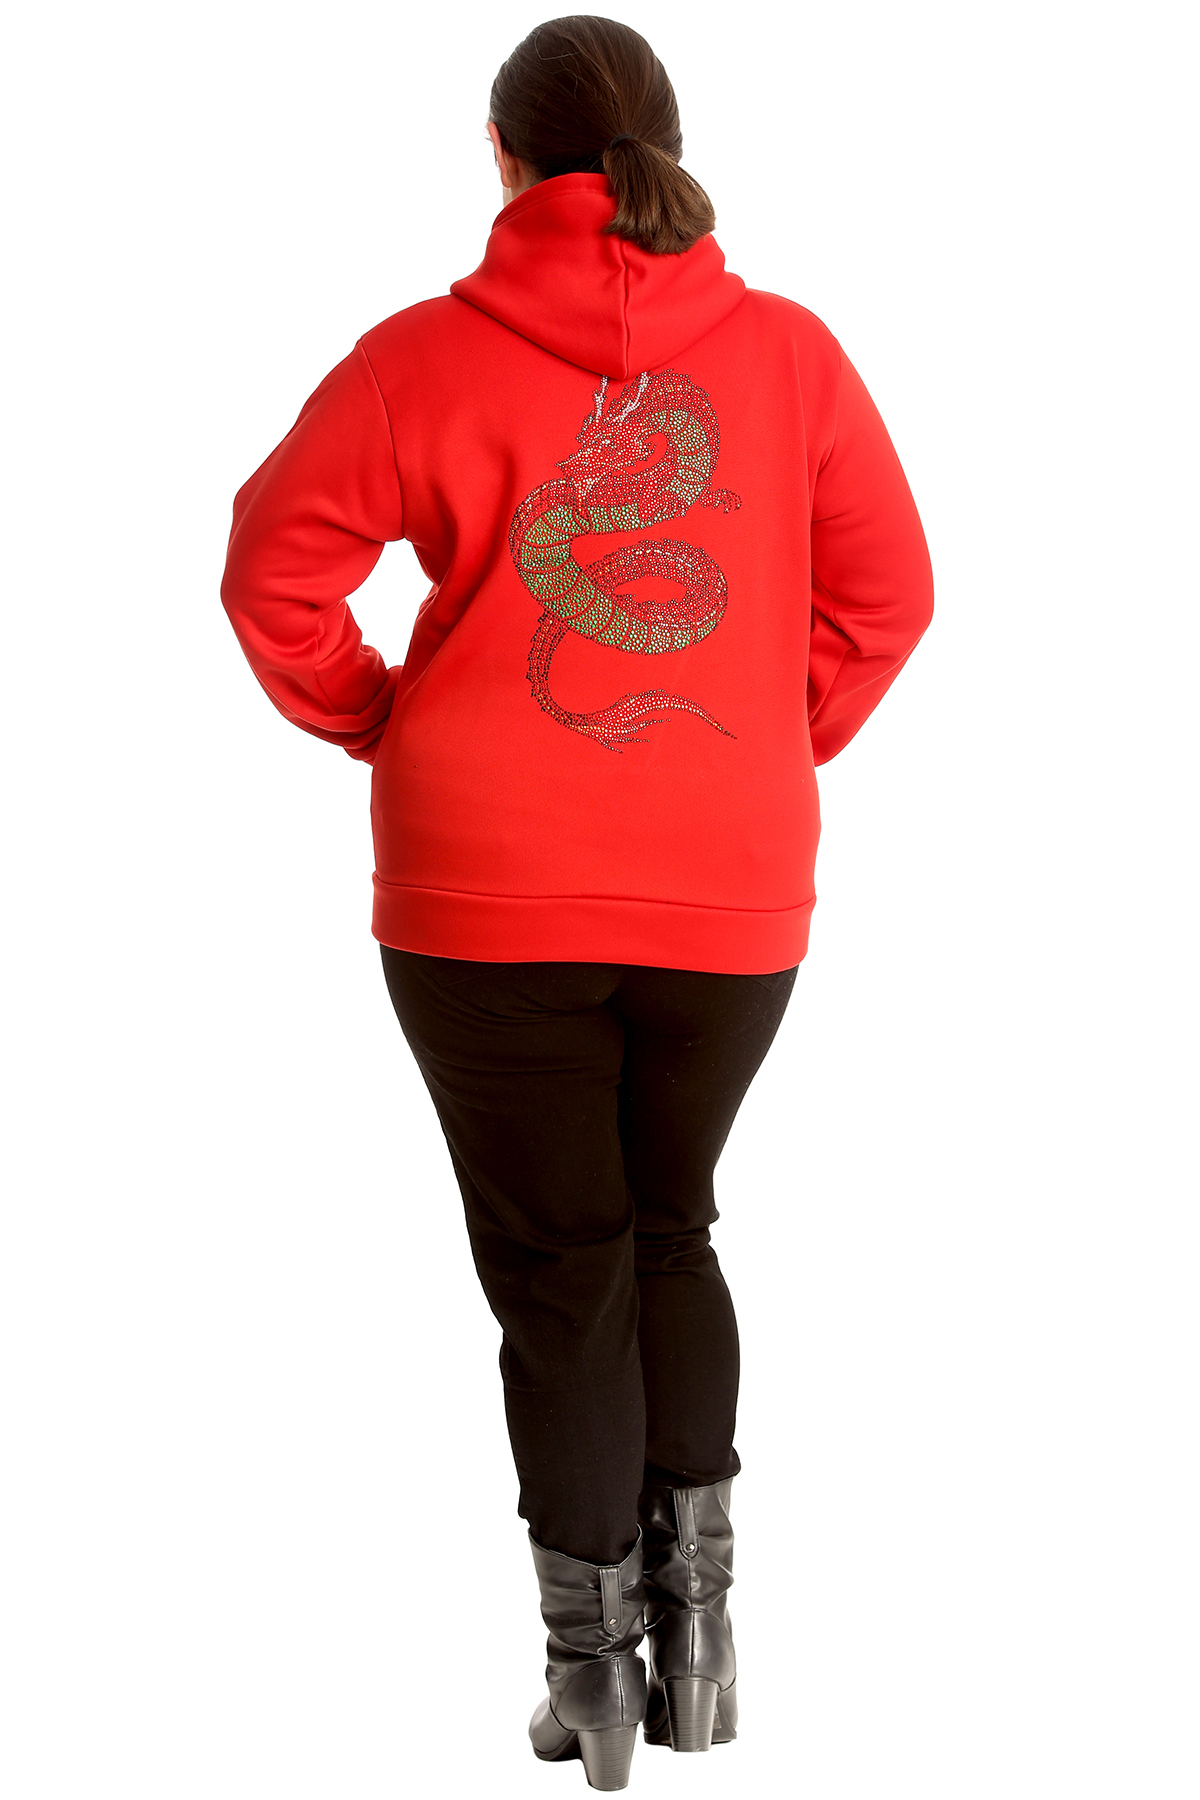 New Womens Plus Size Hoodie Ladies Dragon Stud Rhinestone Oriental Jacket Warm 